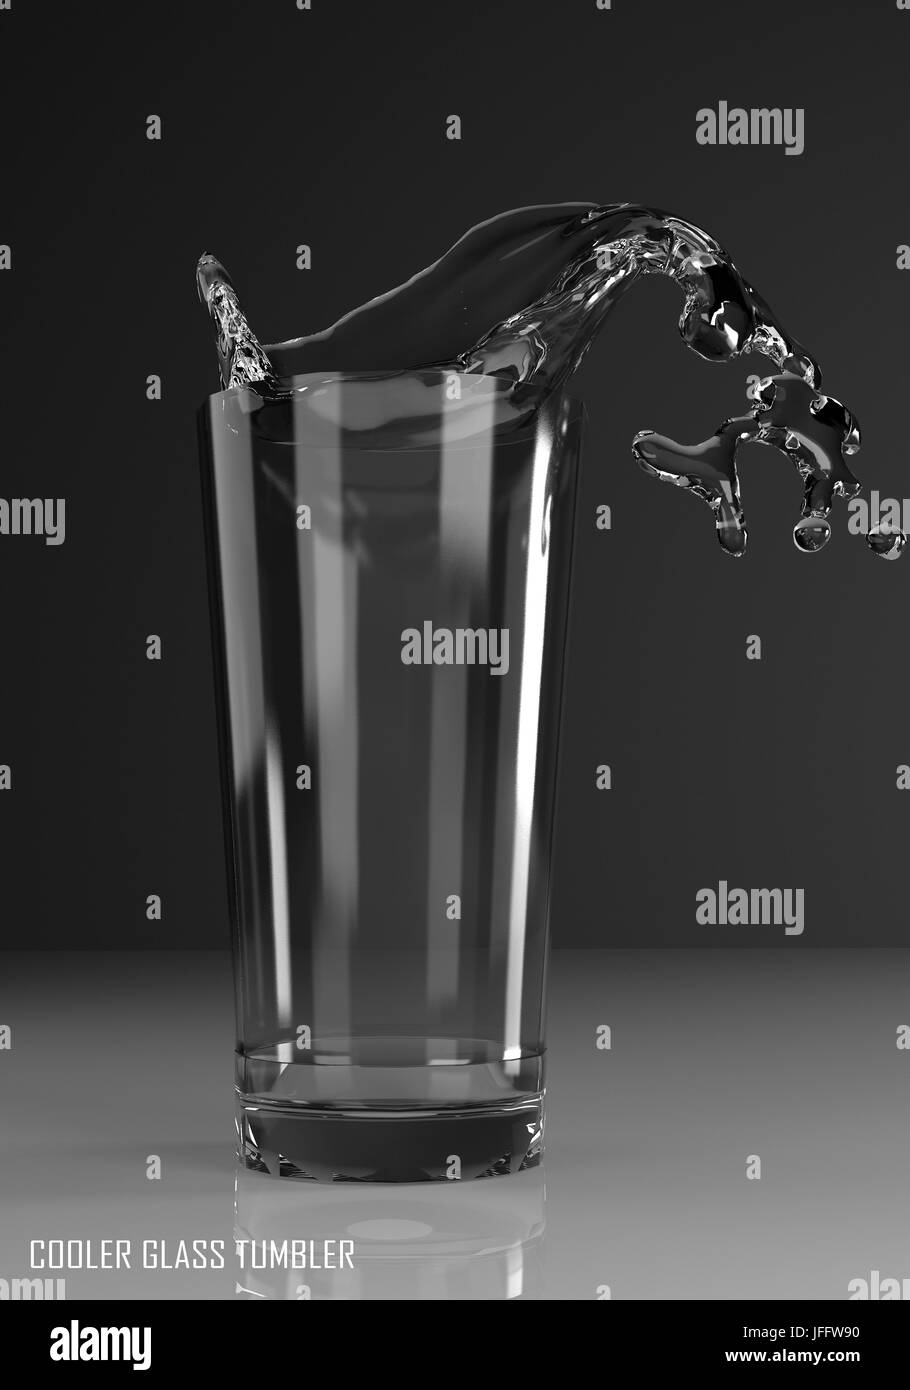 https://c8.alamy.com/comp/JFFW90/cooler-glass-tumbler-3d-illustration-on-dark-background-JFFW90.jpg